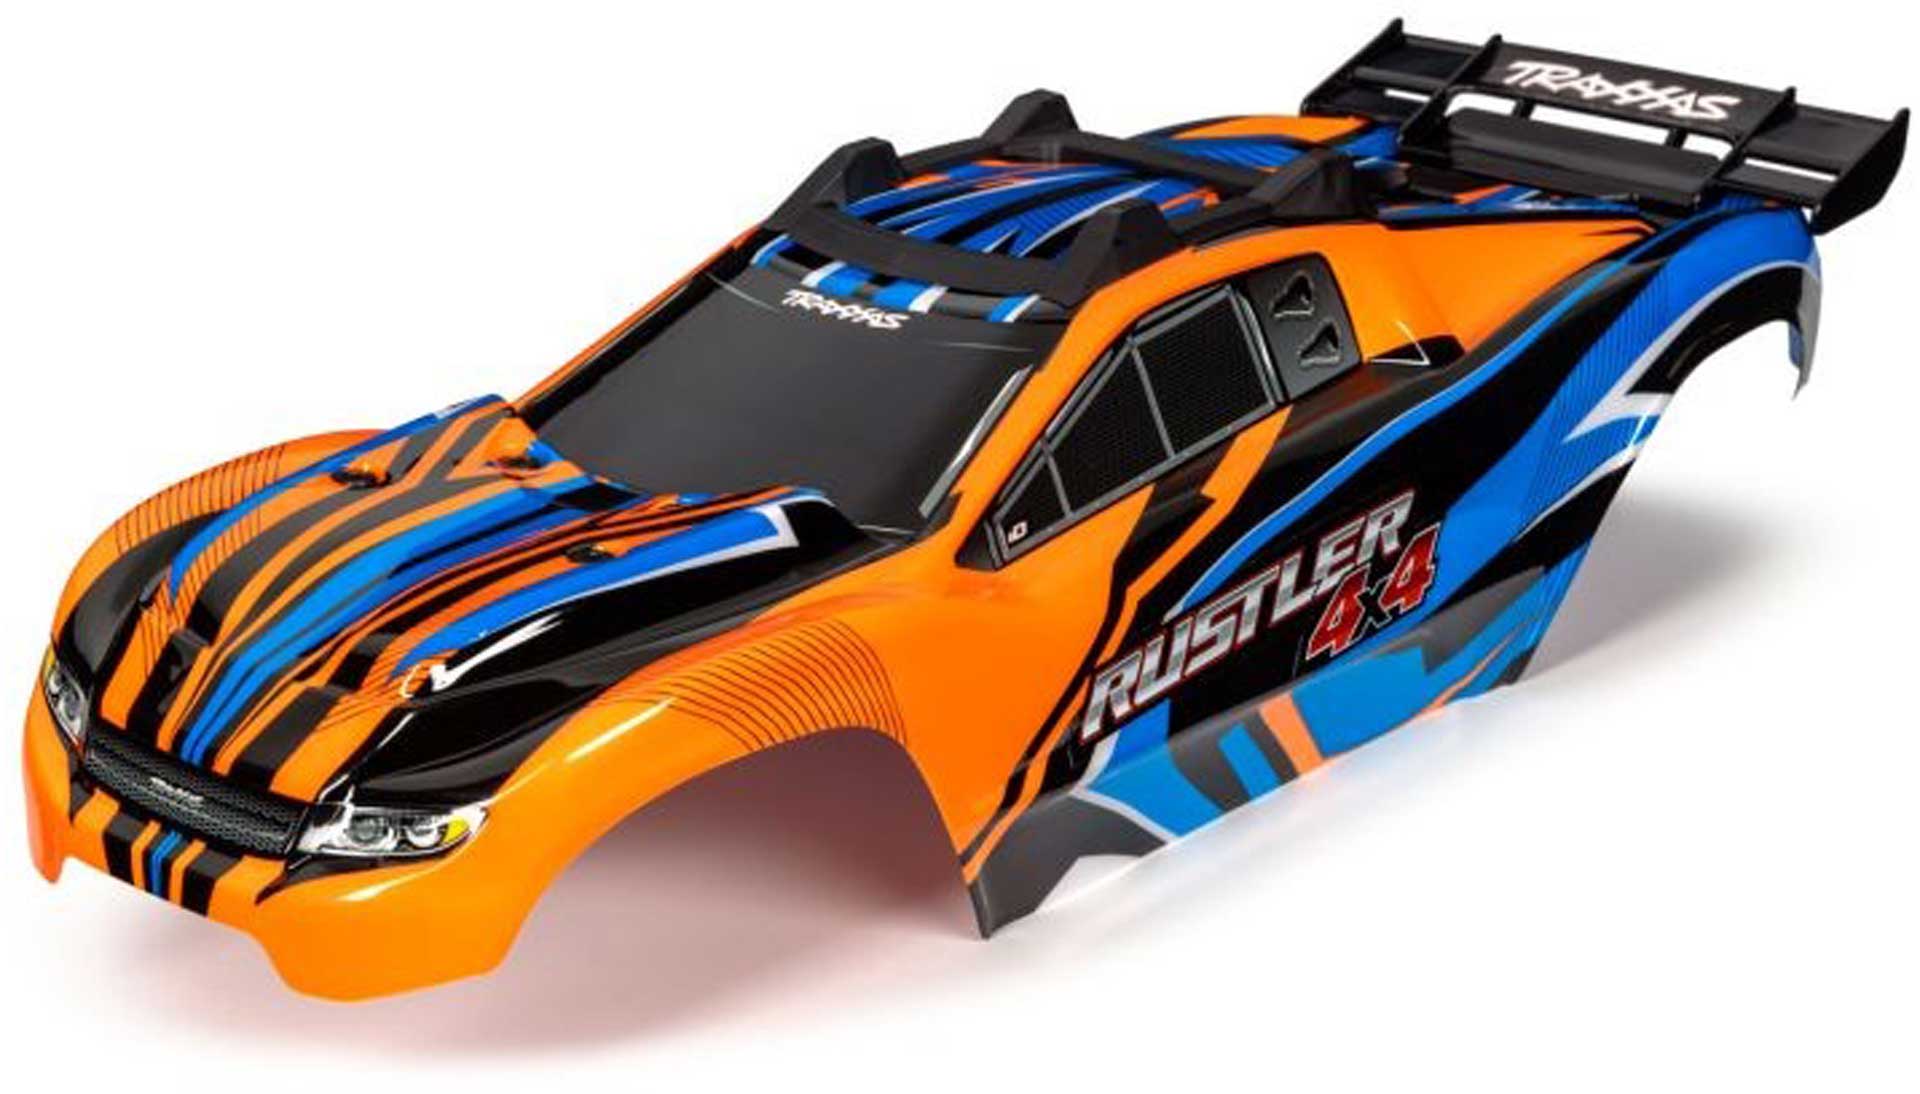 TRAXXAS Carrosserie Rustler 4x4 Orange/Bleu lackiert